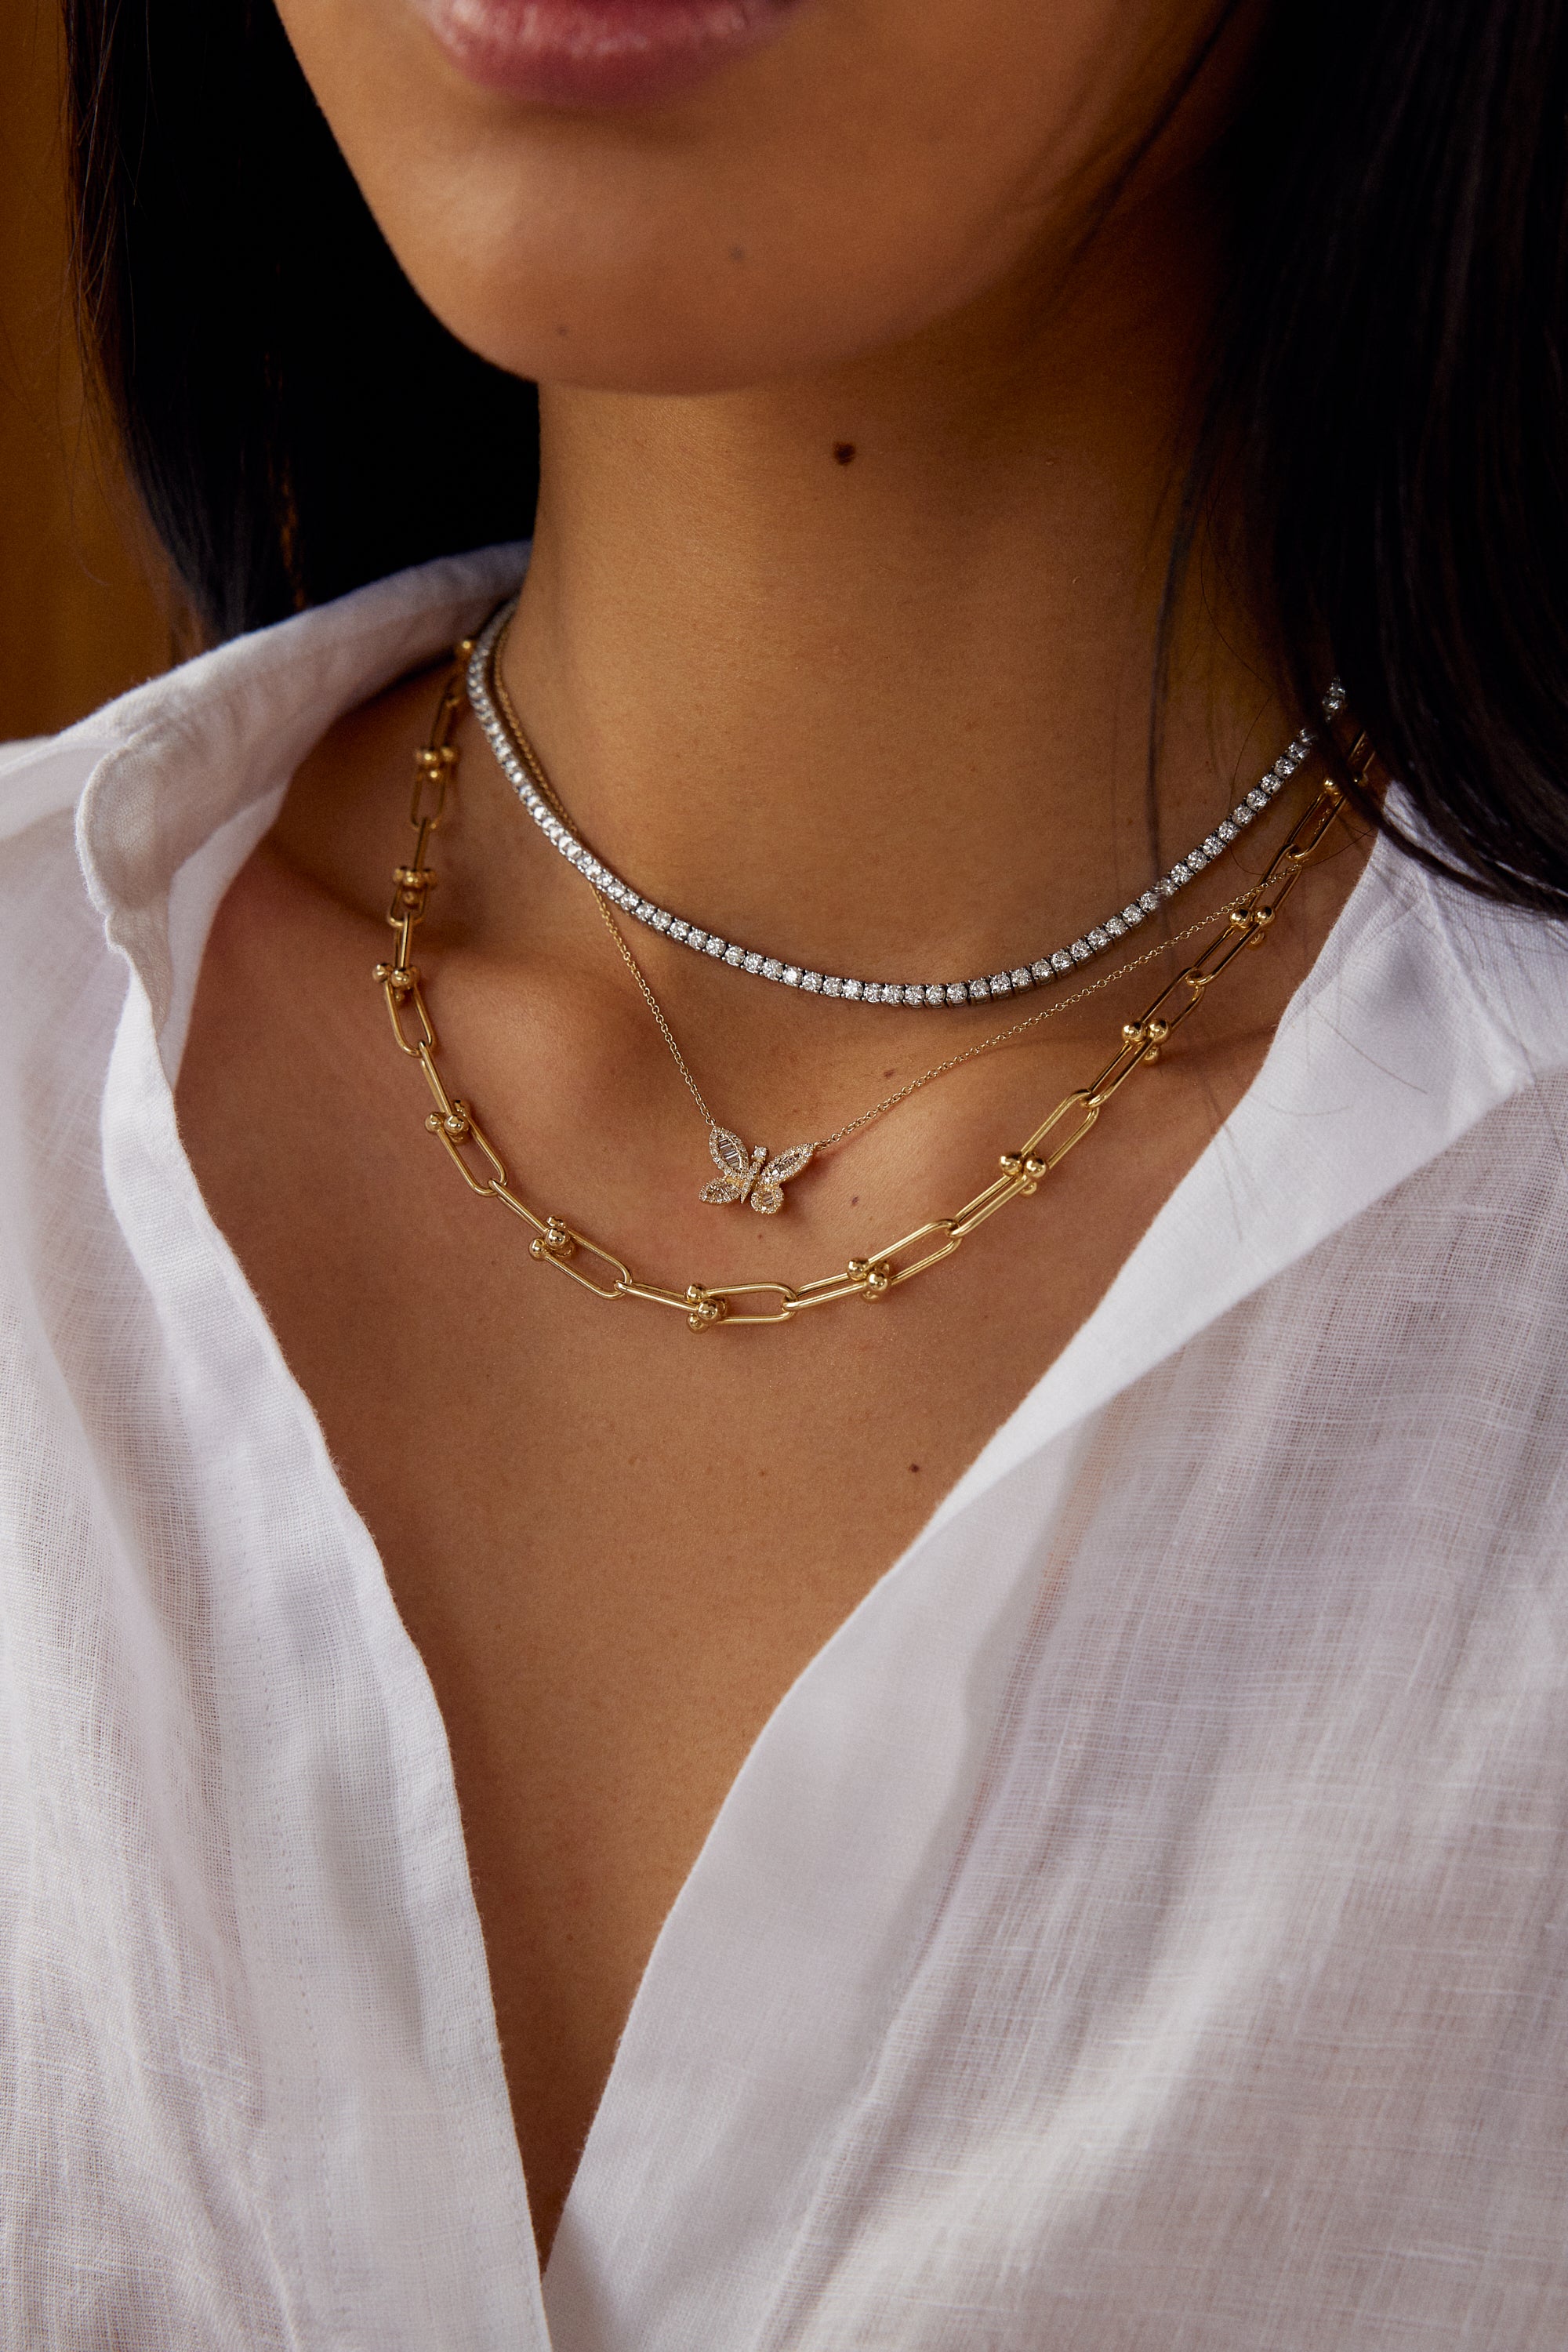 Diamond Baguette Butterfly Necklace